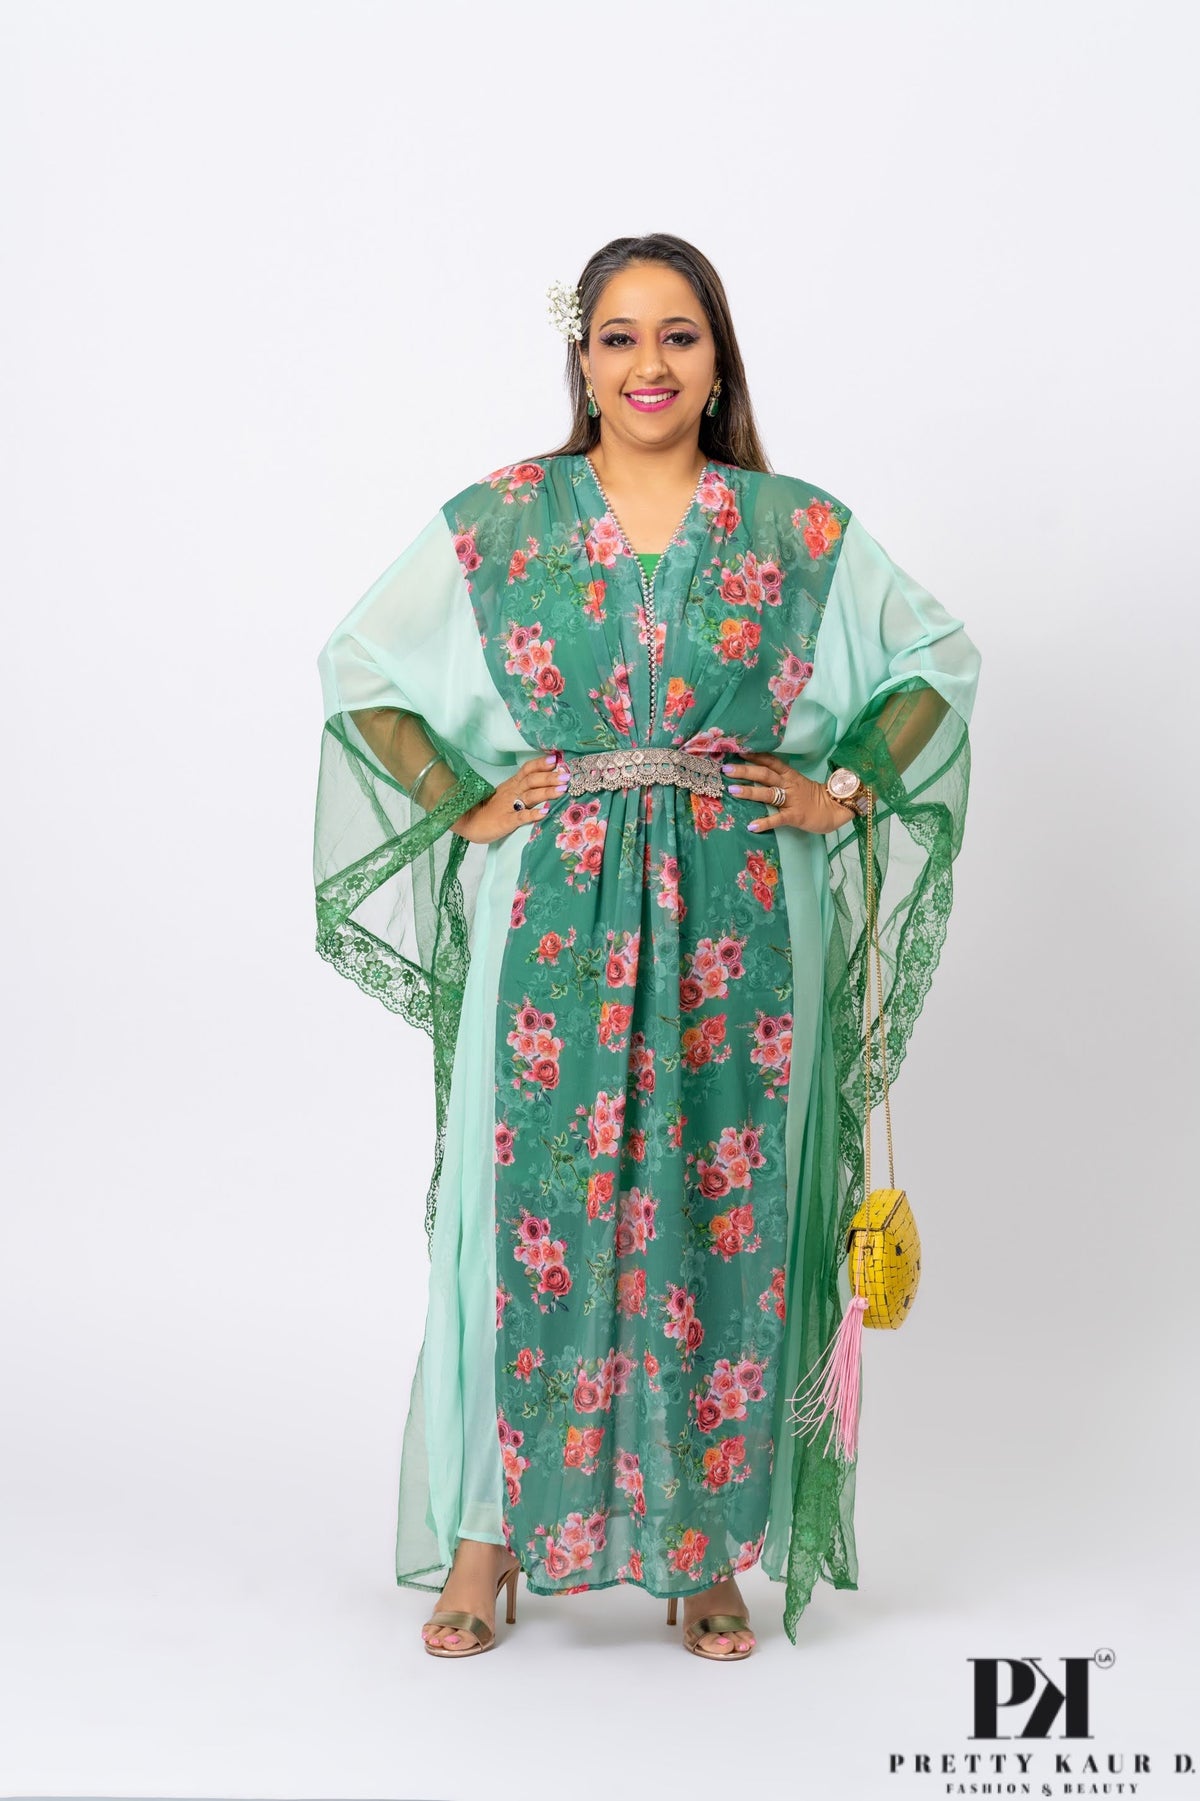 Pretty-Kaur-fashion-beauty-Green-Floral-Print-Kaftan-1